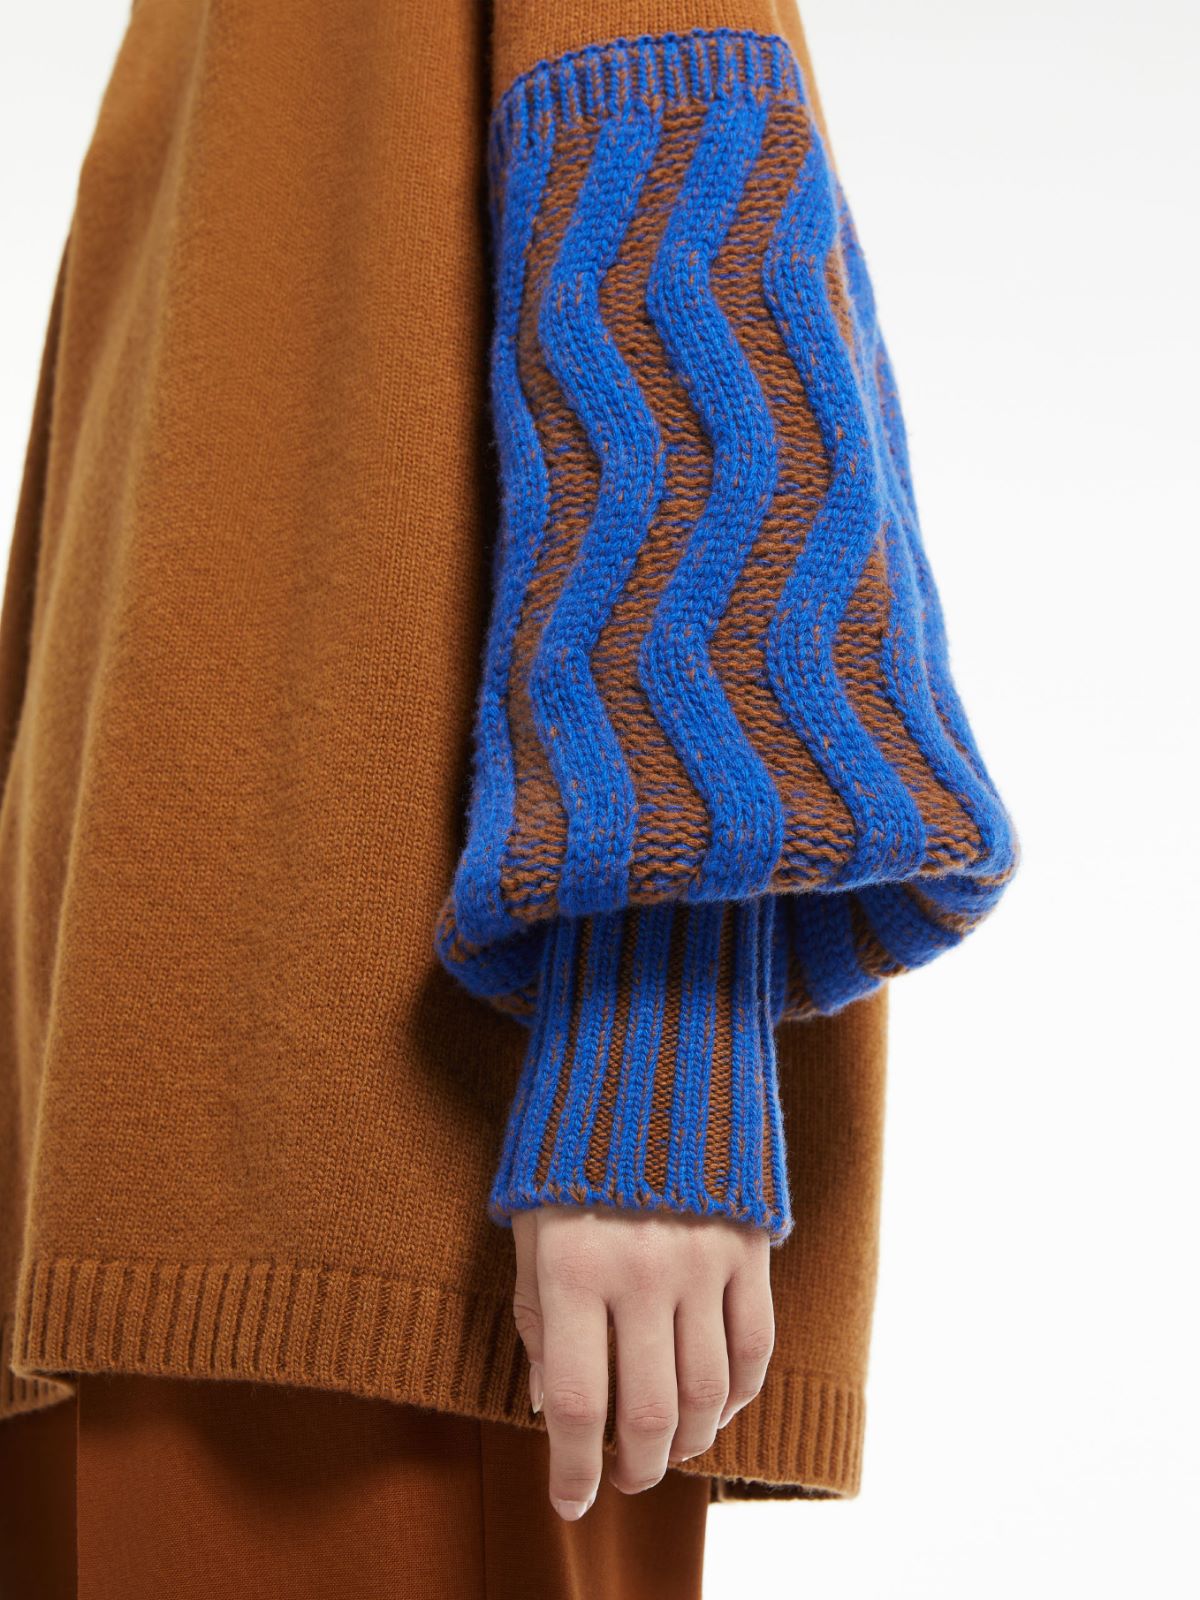 Wool sweater - CORNFLOWER BLUE - Weekend Max Mara - 5